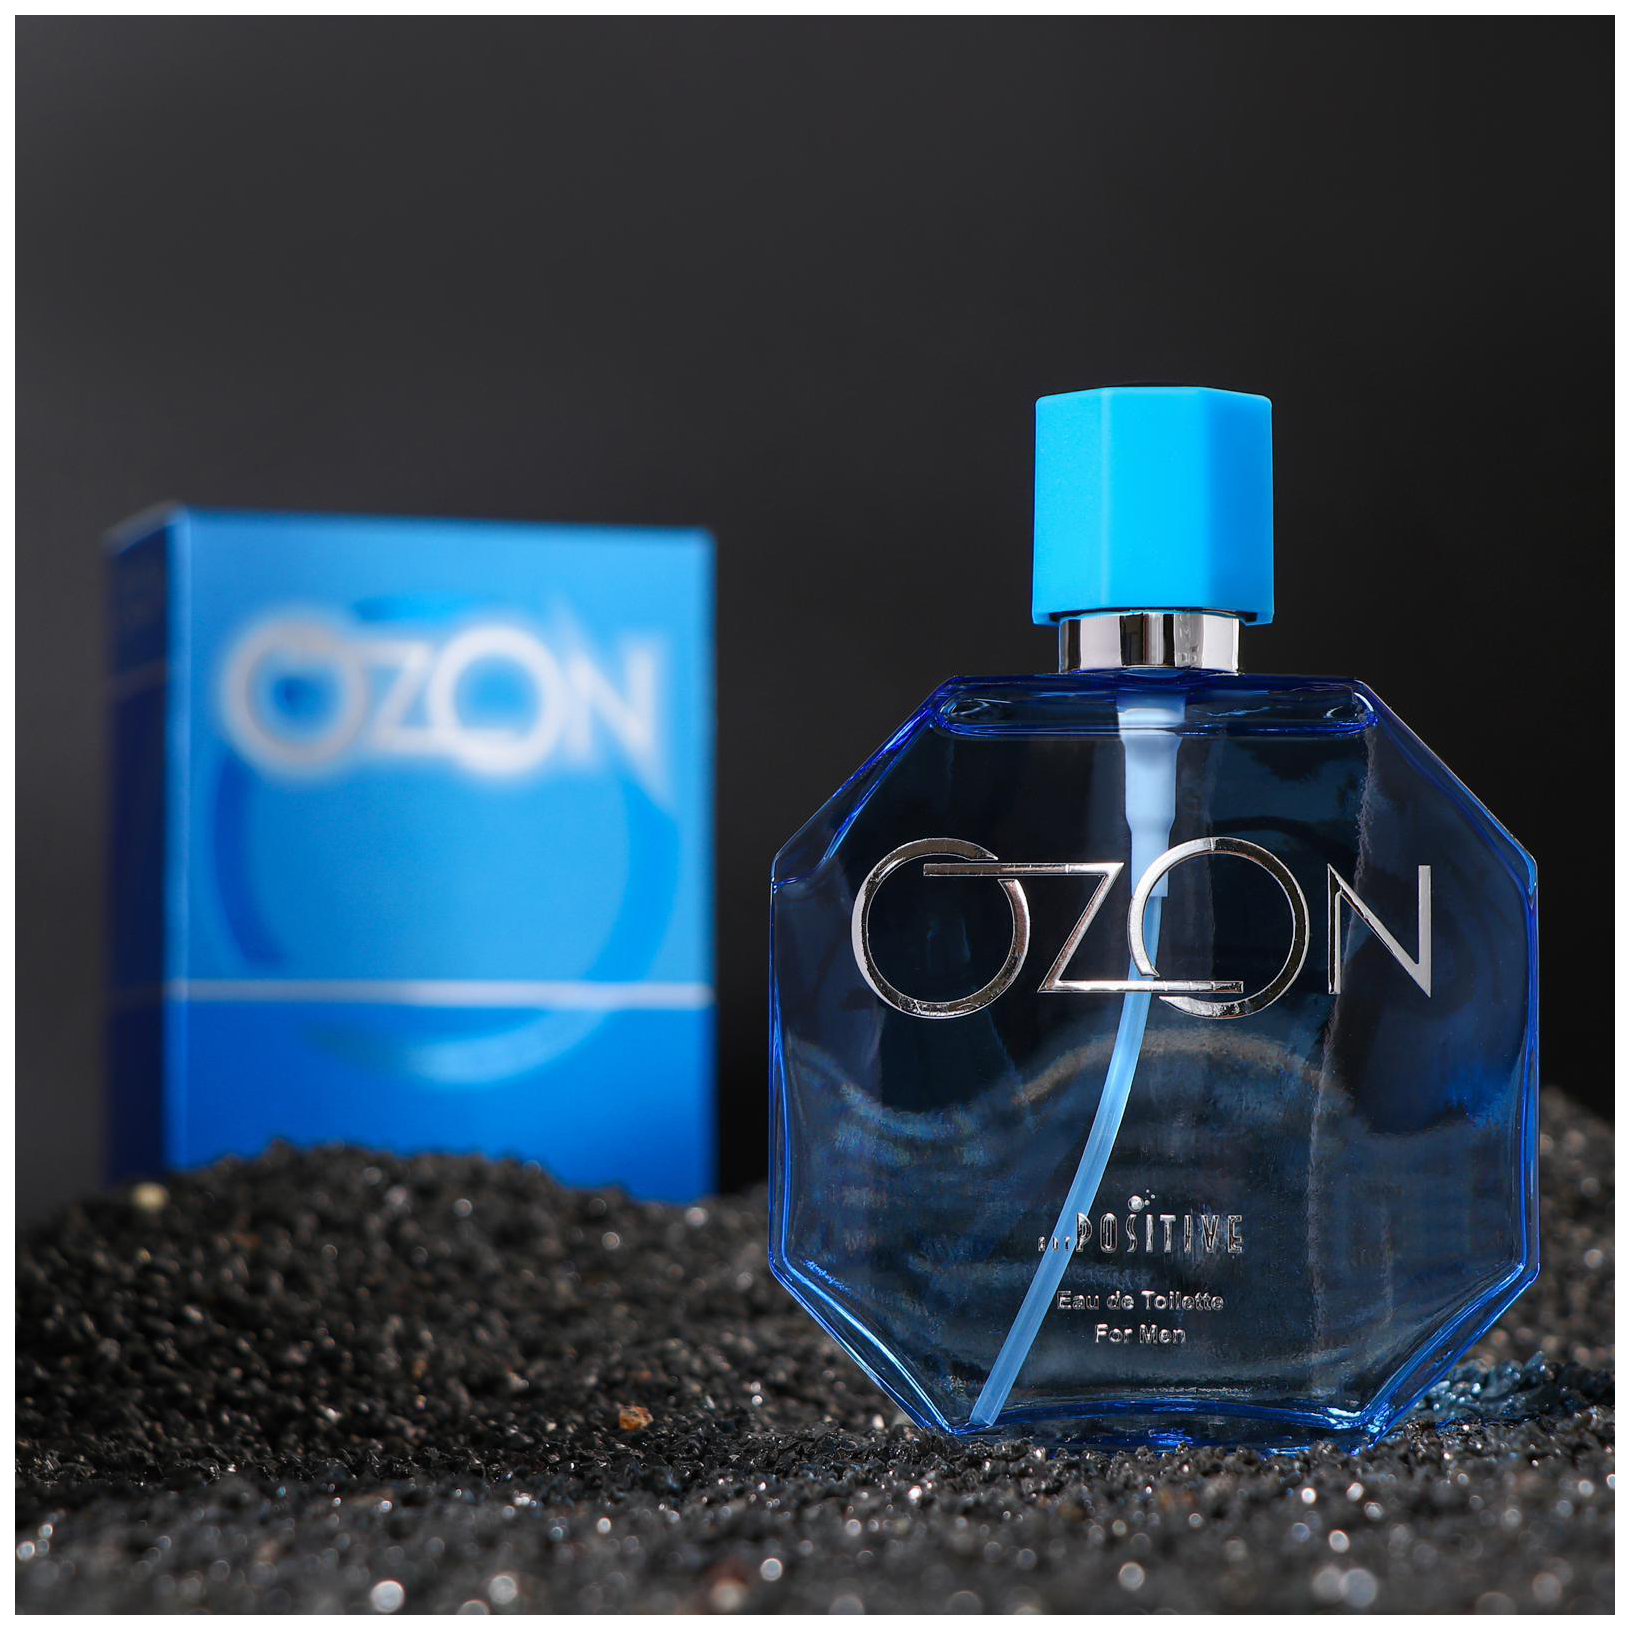 Озон мужской парфюм. Туалетная вода мужская Ozone. Туалетная вода мужская OZON, 85 мл. Духи Озон мужские. Туалетная вода мужская для молодого парня.